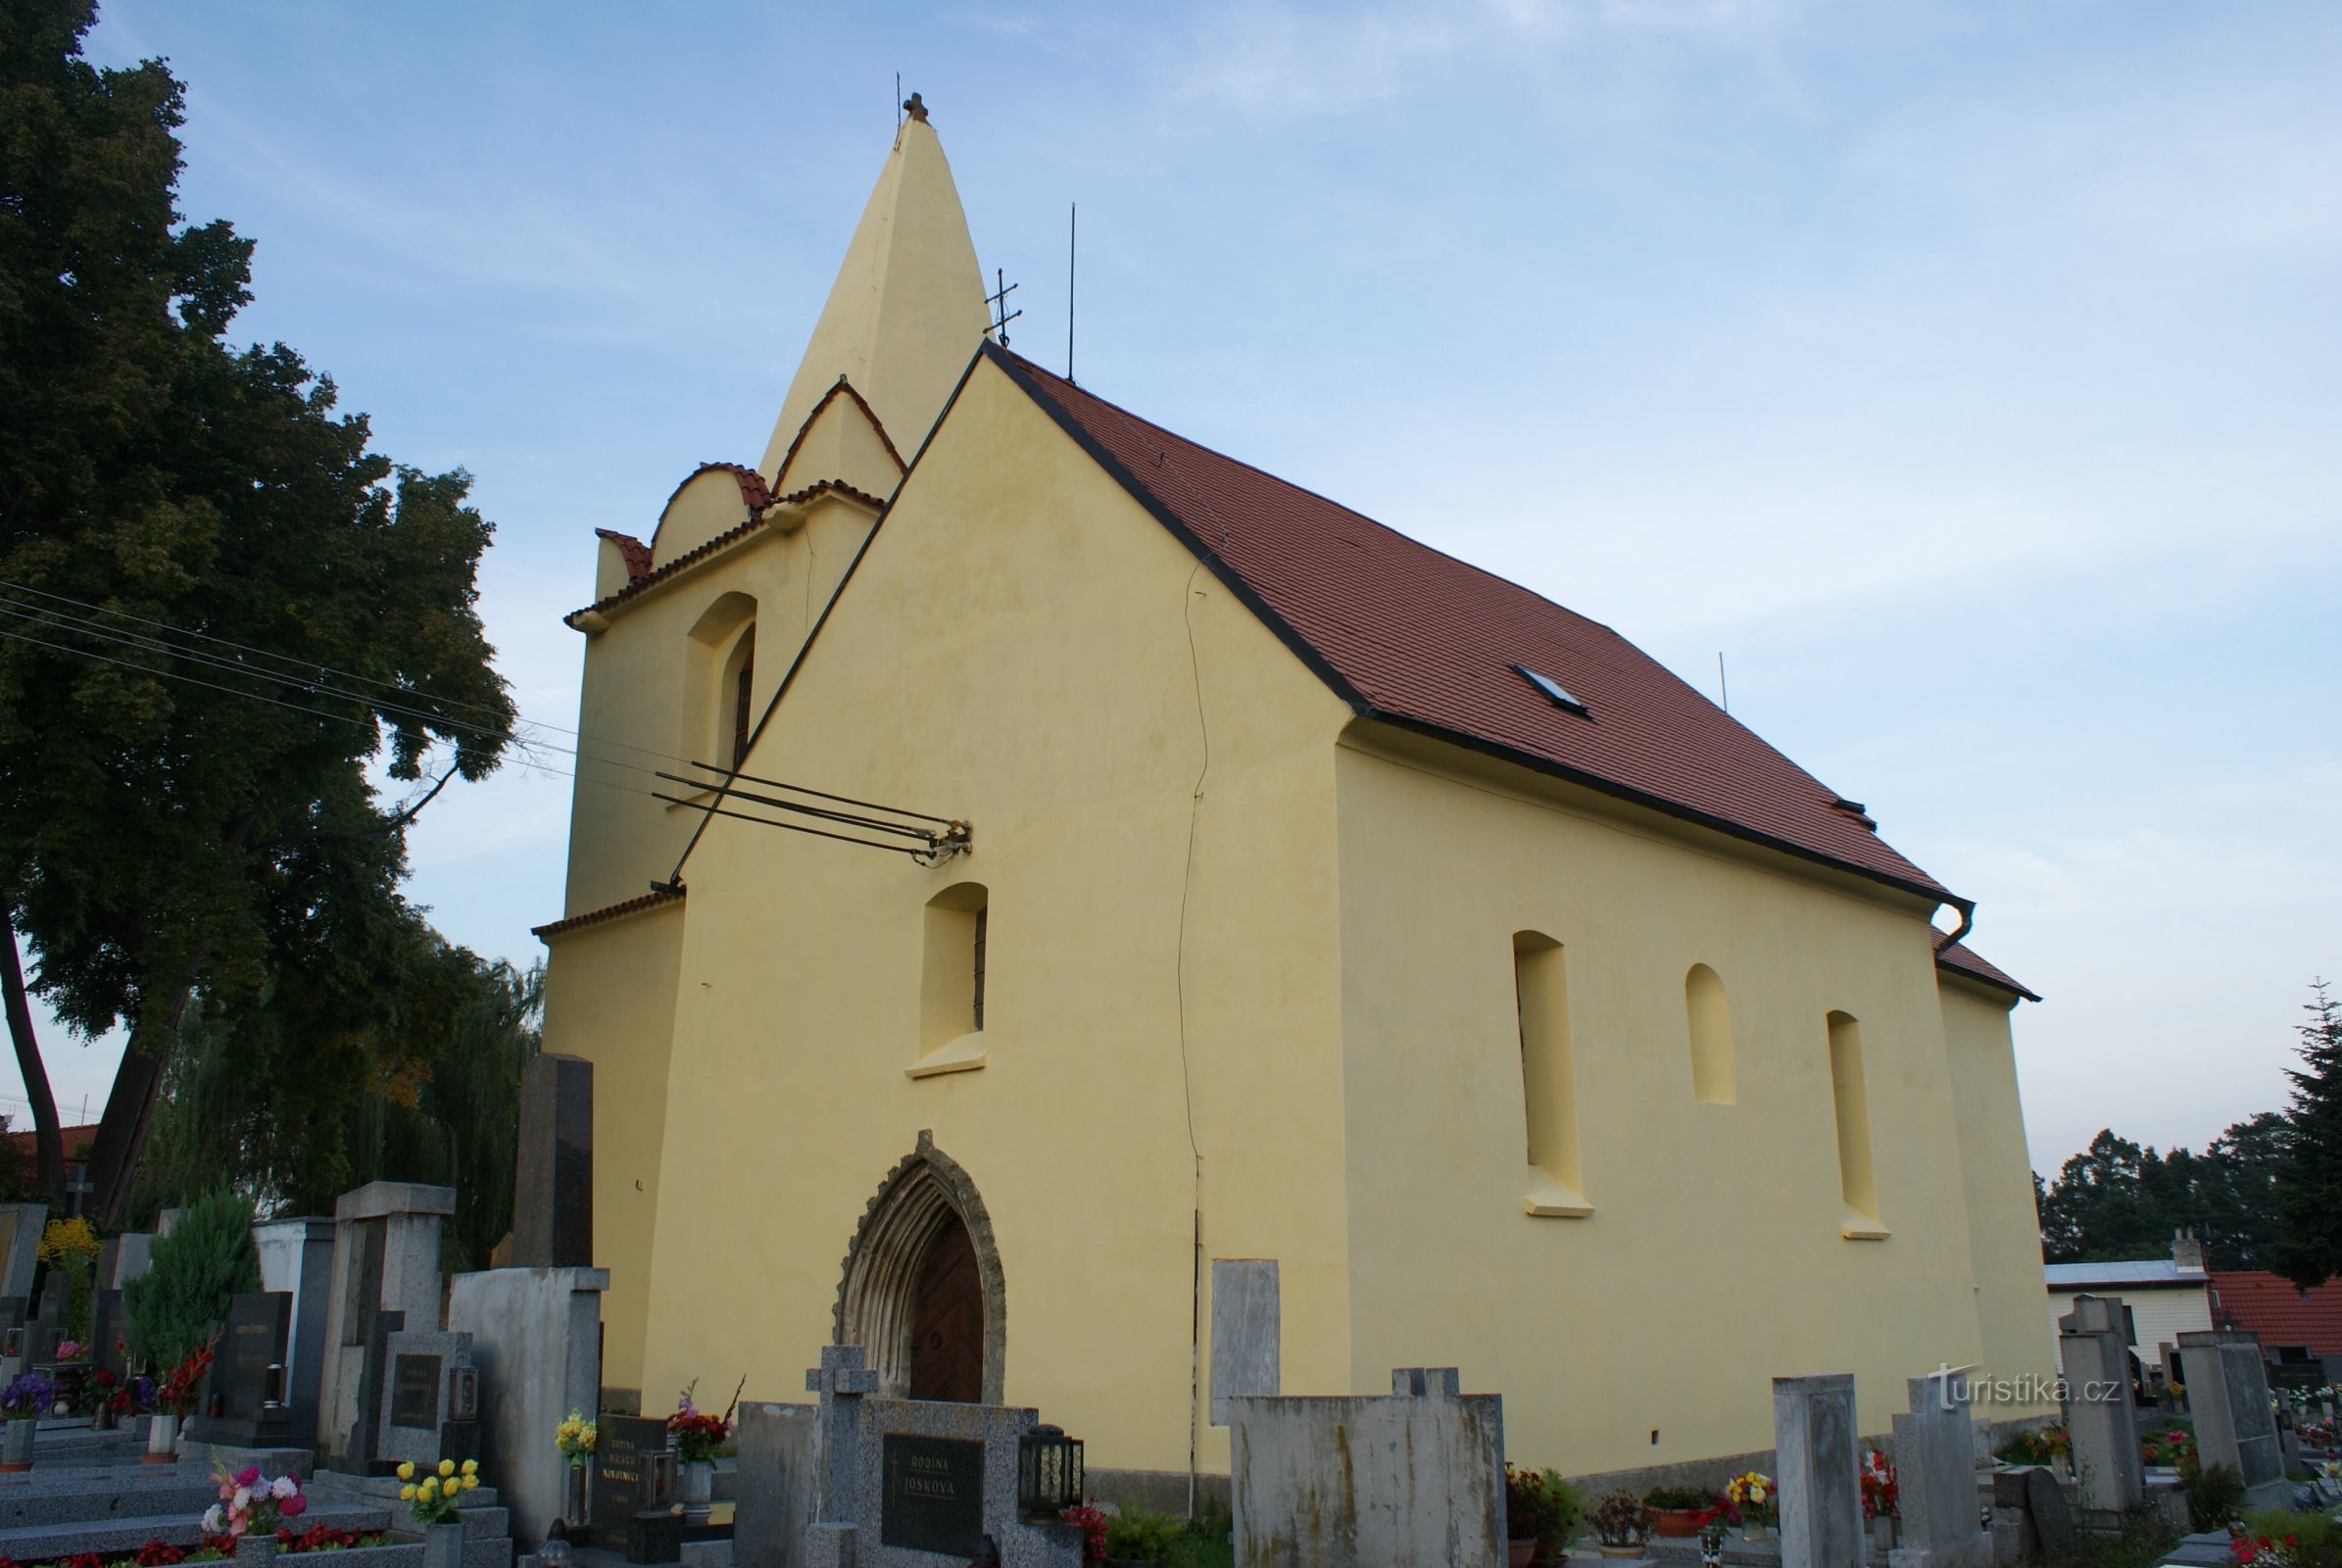 Okresaneč - church of St. Bartholomew